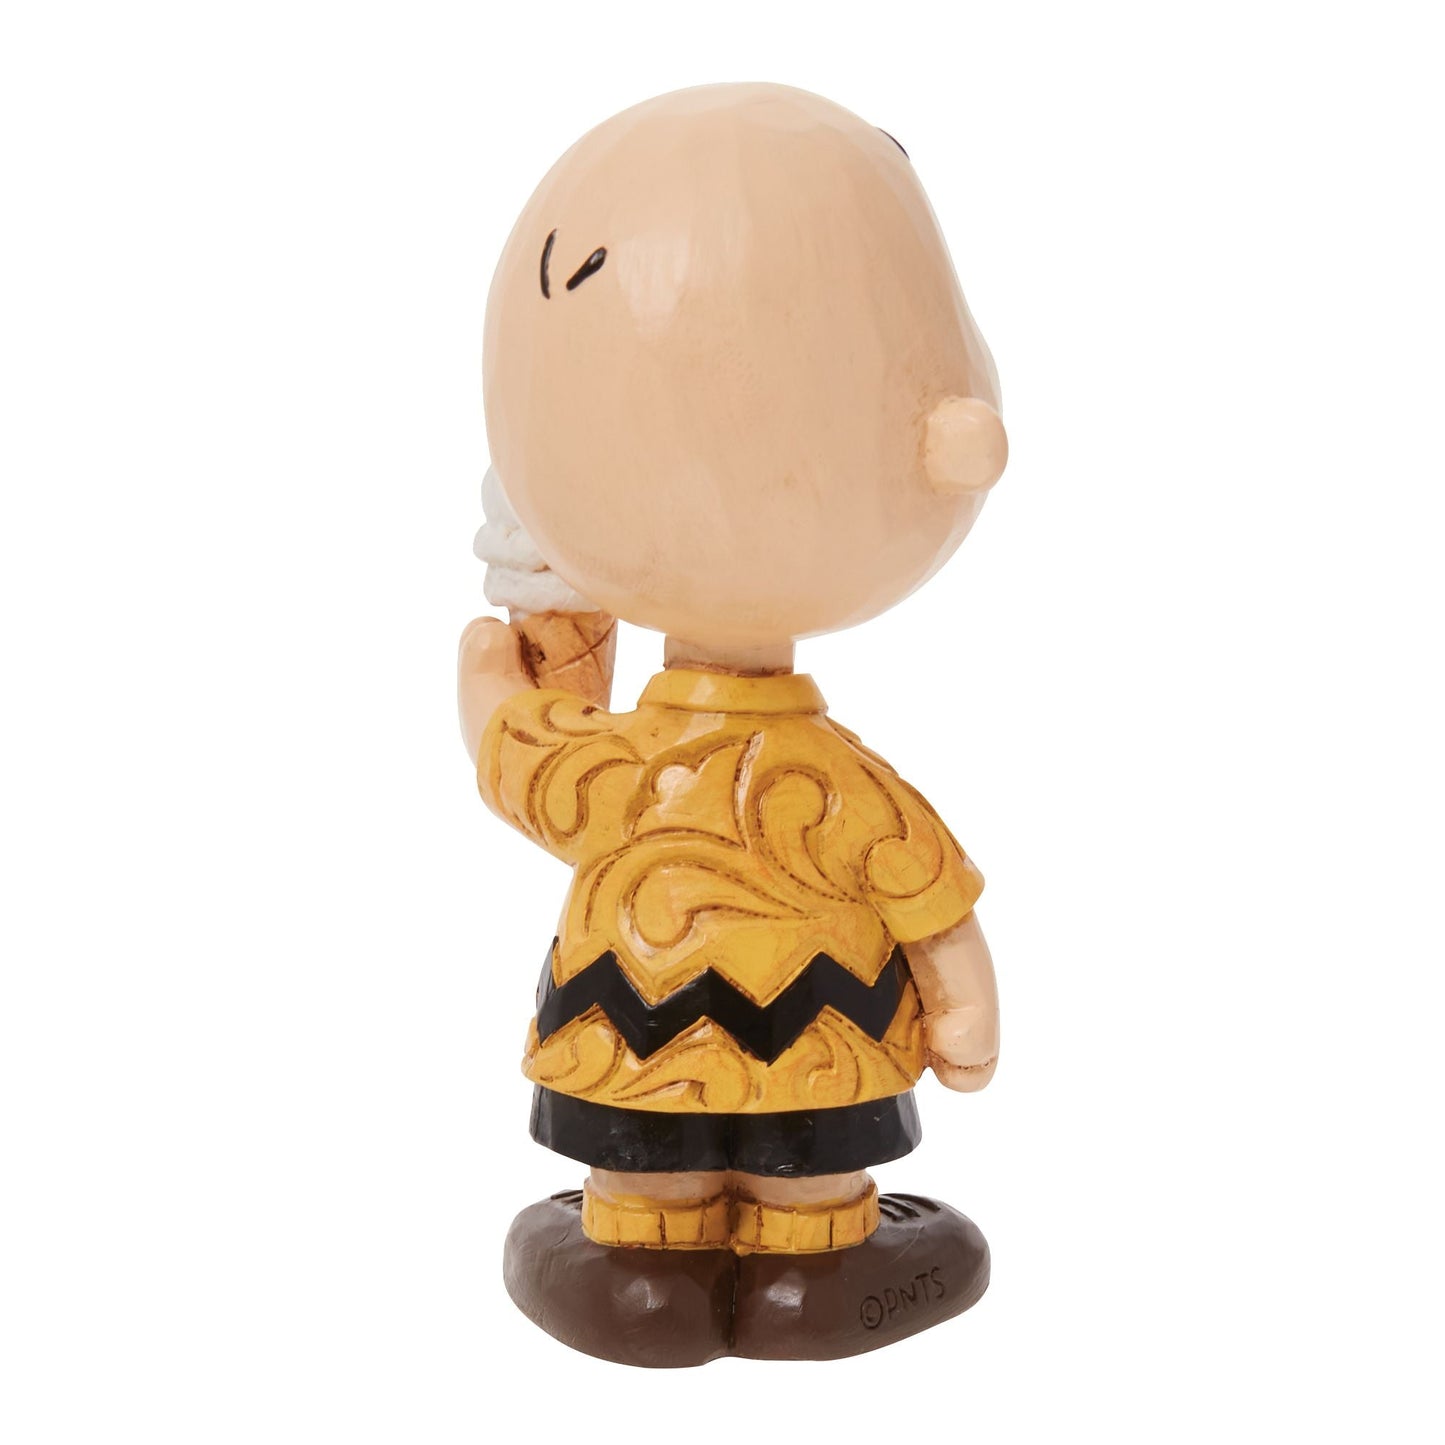 Jim Shore Peanuts Mini Charlie Brown With Ice Cream Cone Figurine, 3.25"